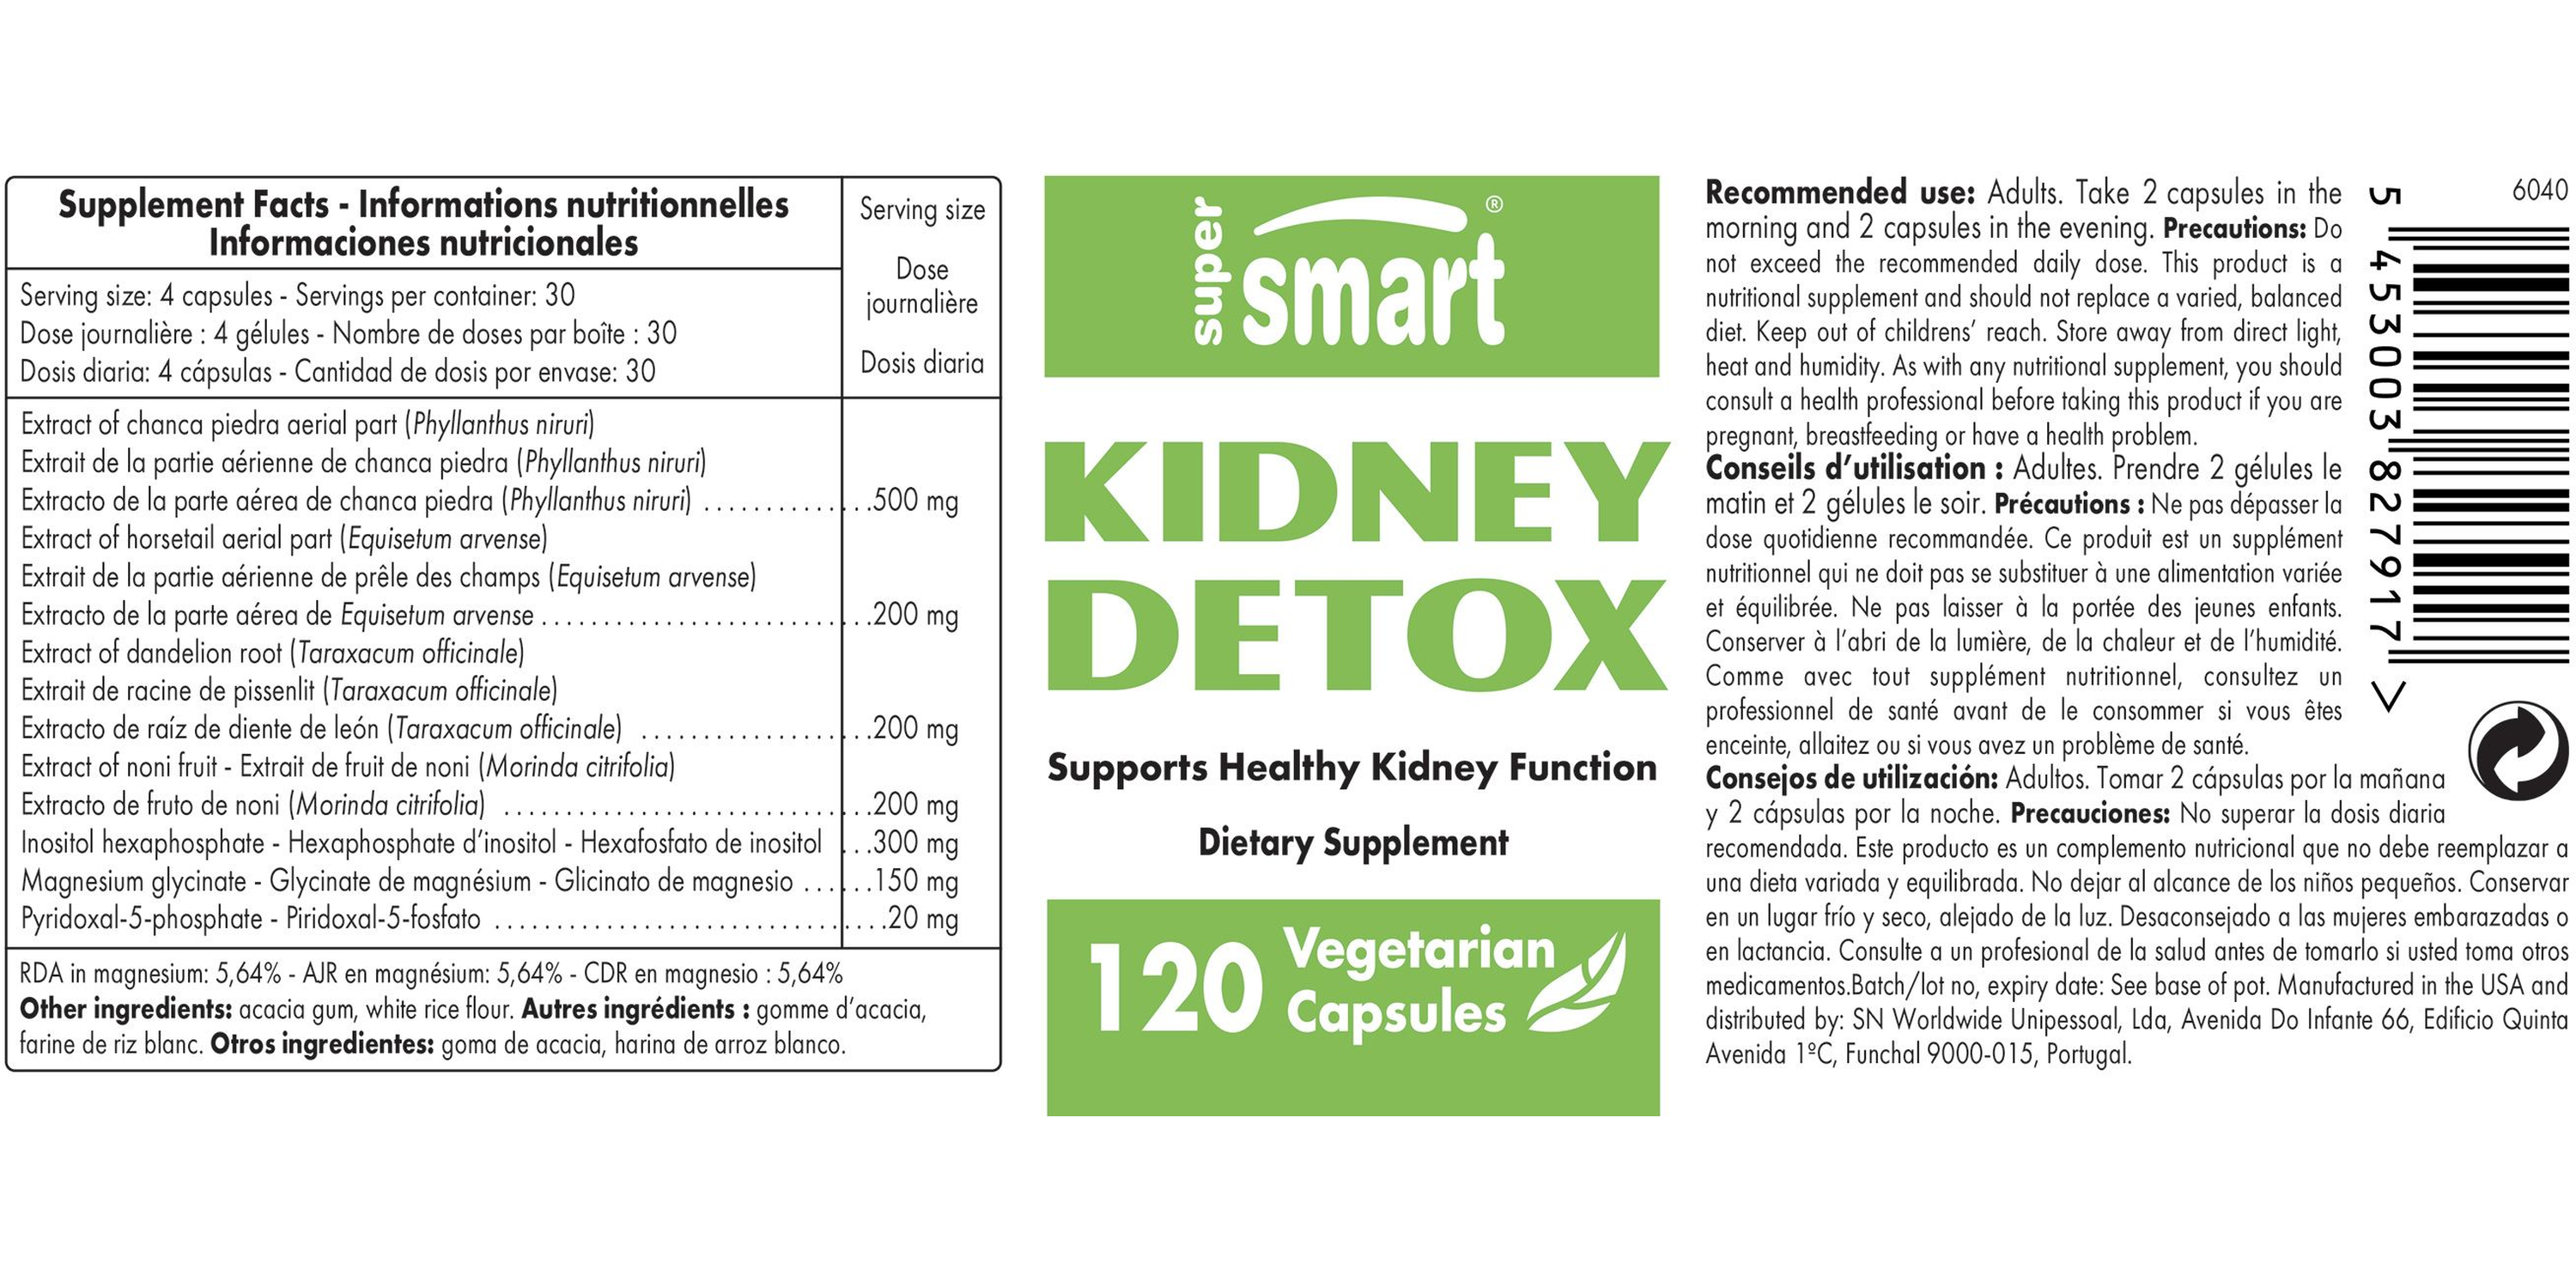 Kidney Detox